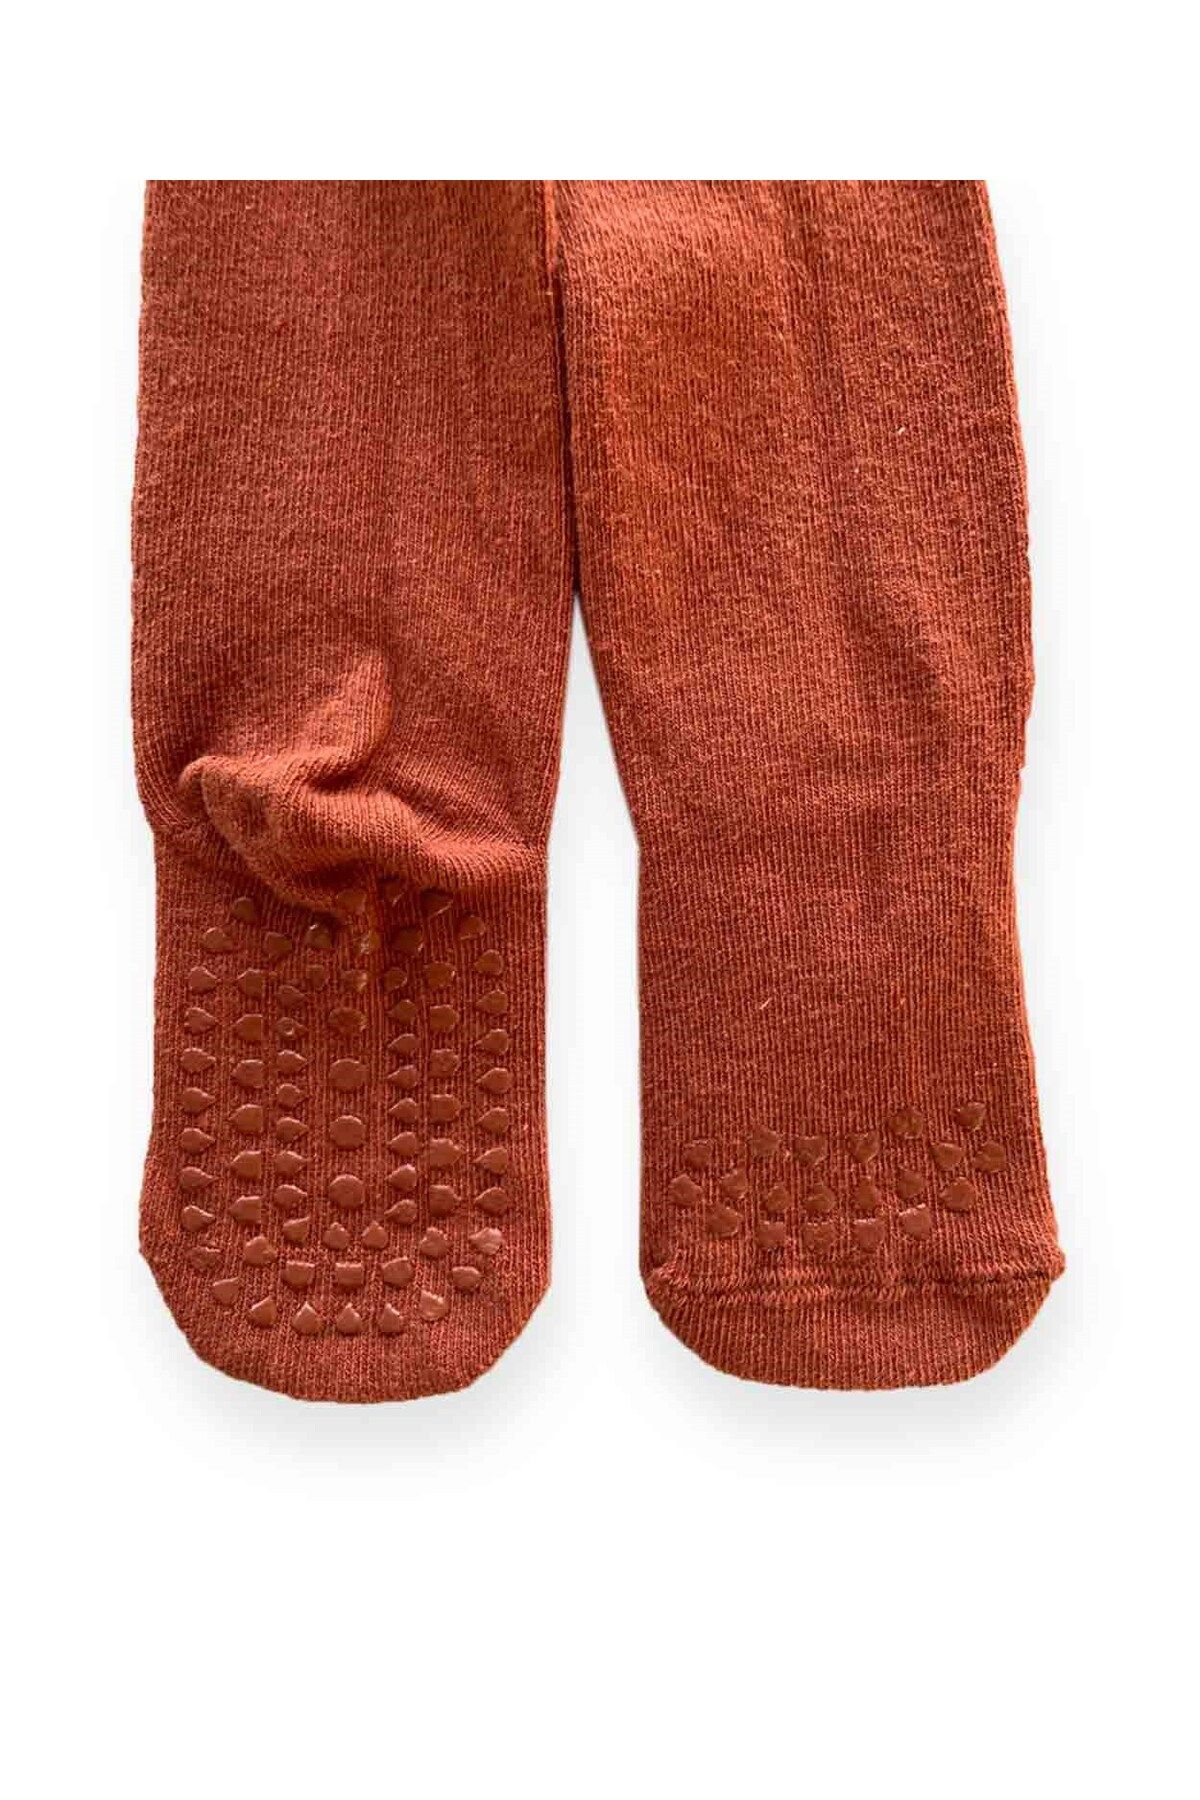 Cigit کاشی جوراب شلواری خزنده و ضد لغزش 6 تا 24 ماهه